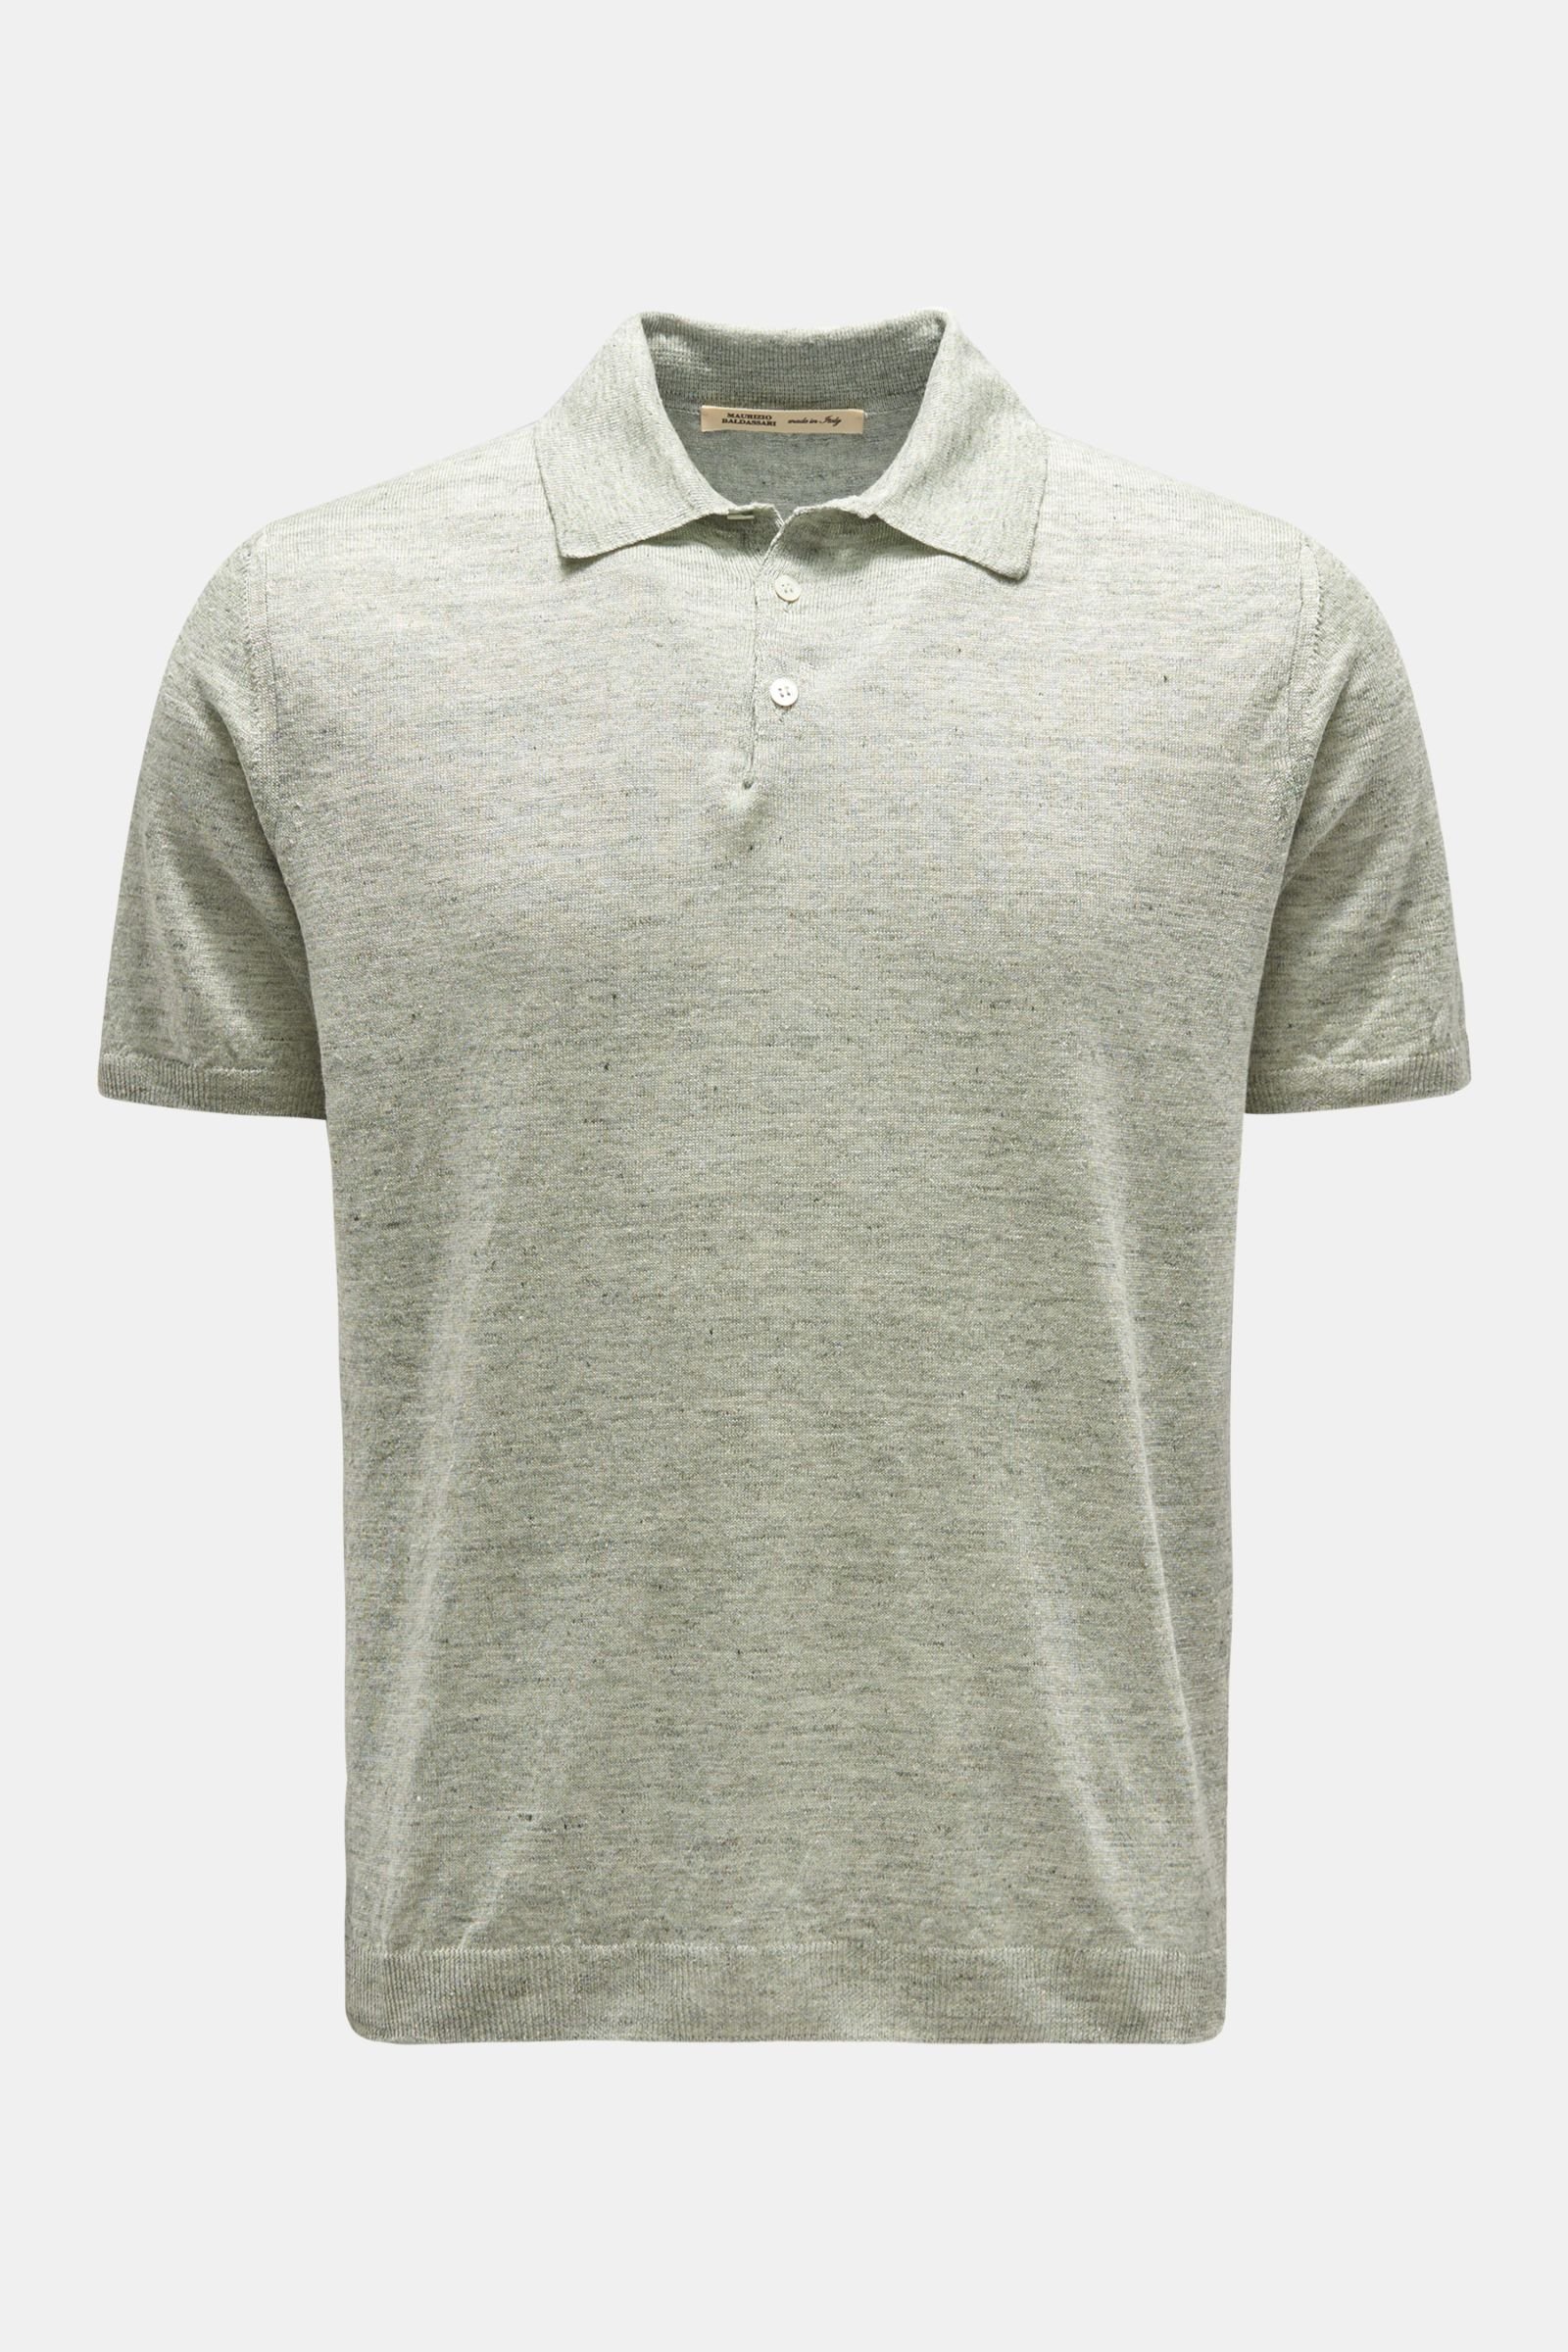 Linen short-sleeved knit polo grey-green 